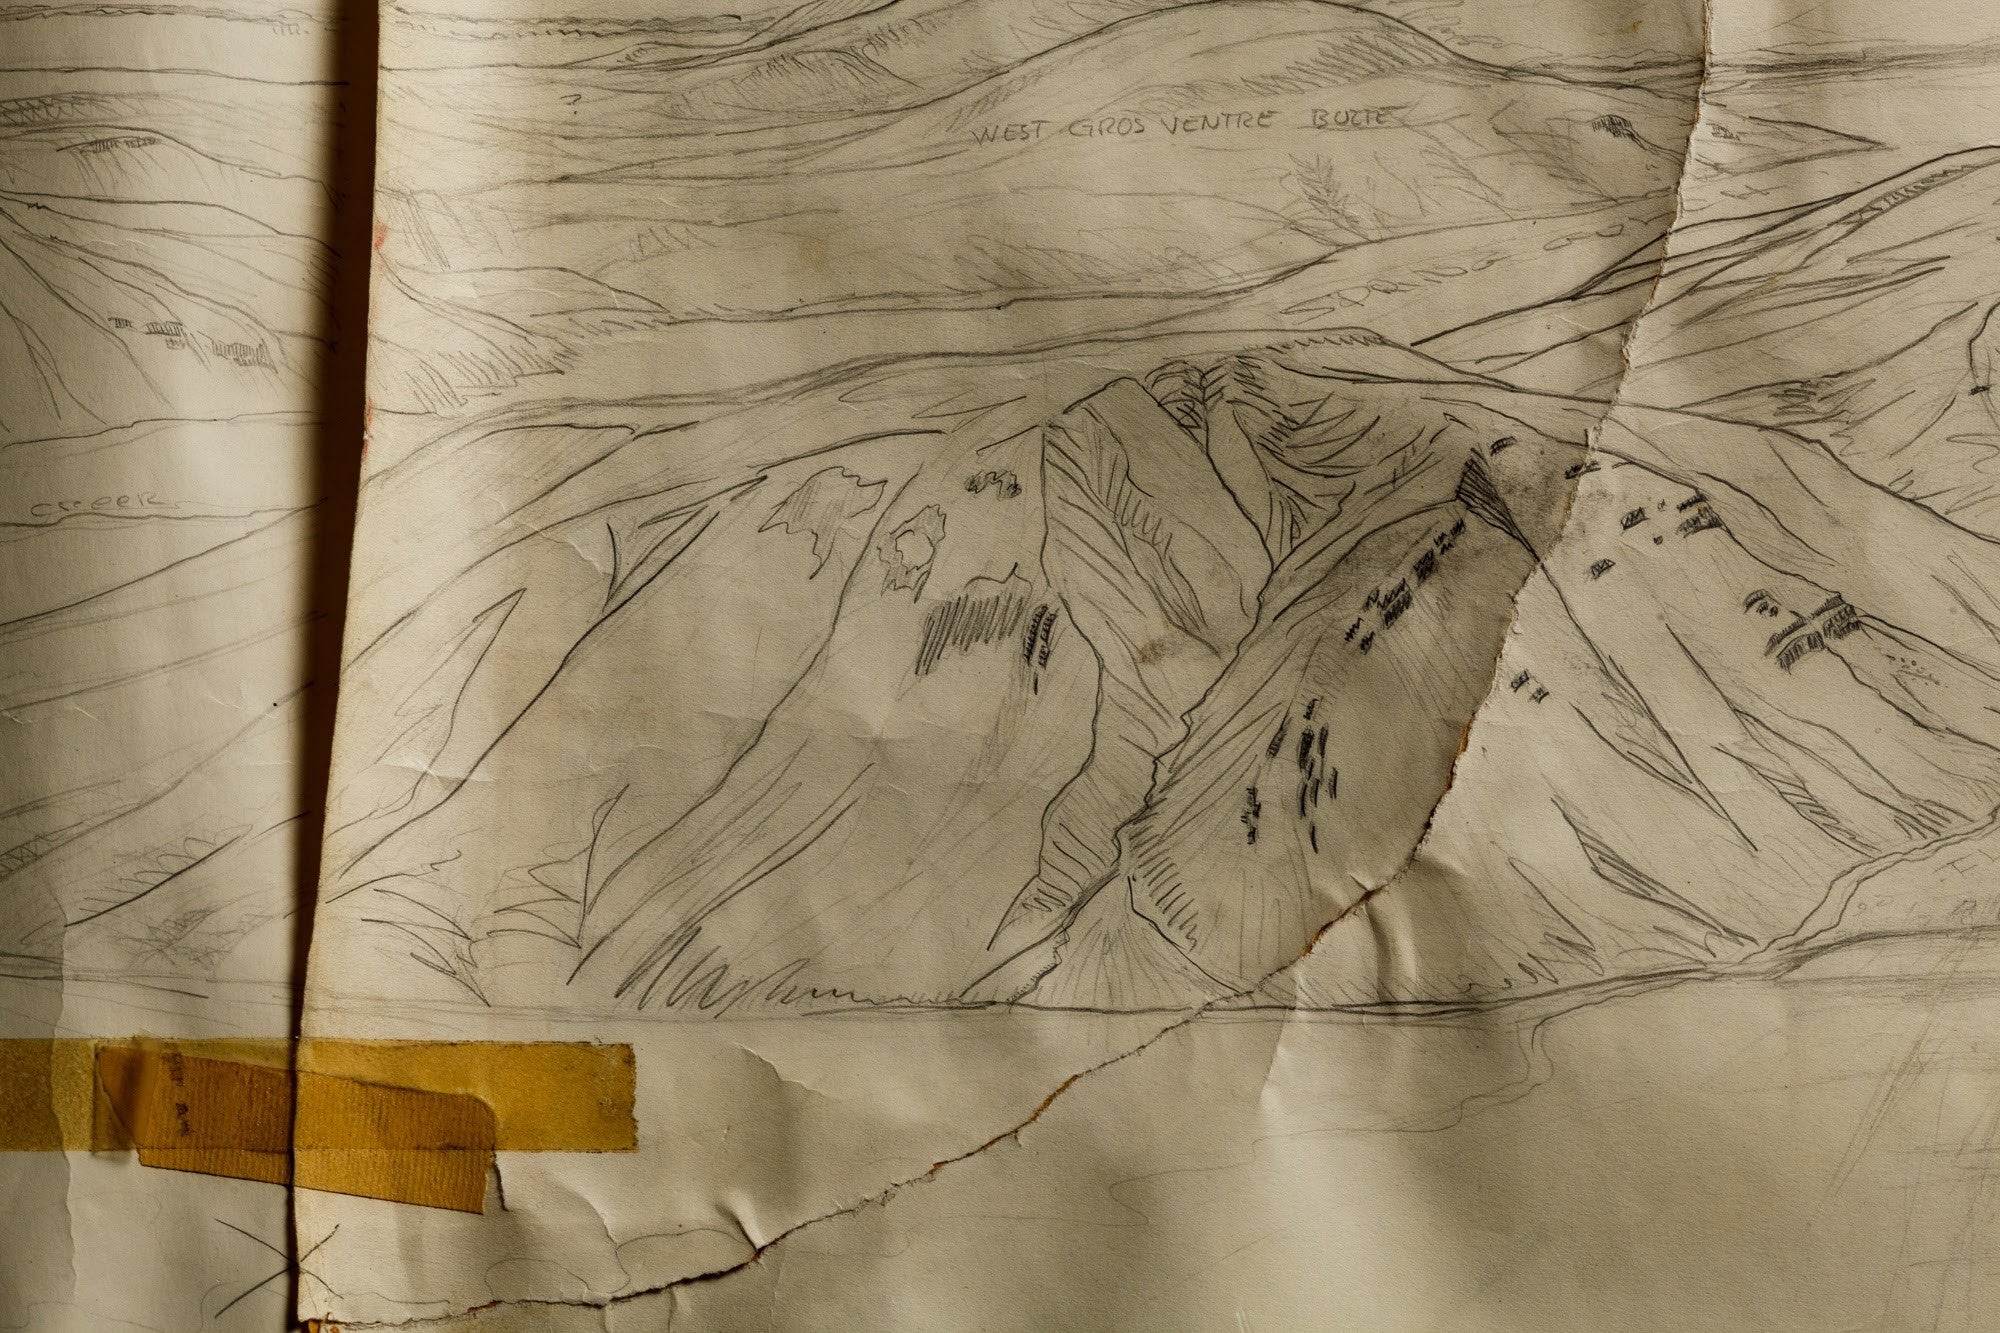 Jackson Hole Physiographic Map - Grant "Tiny" Hagen